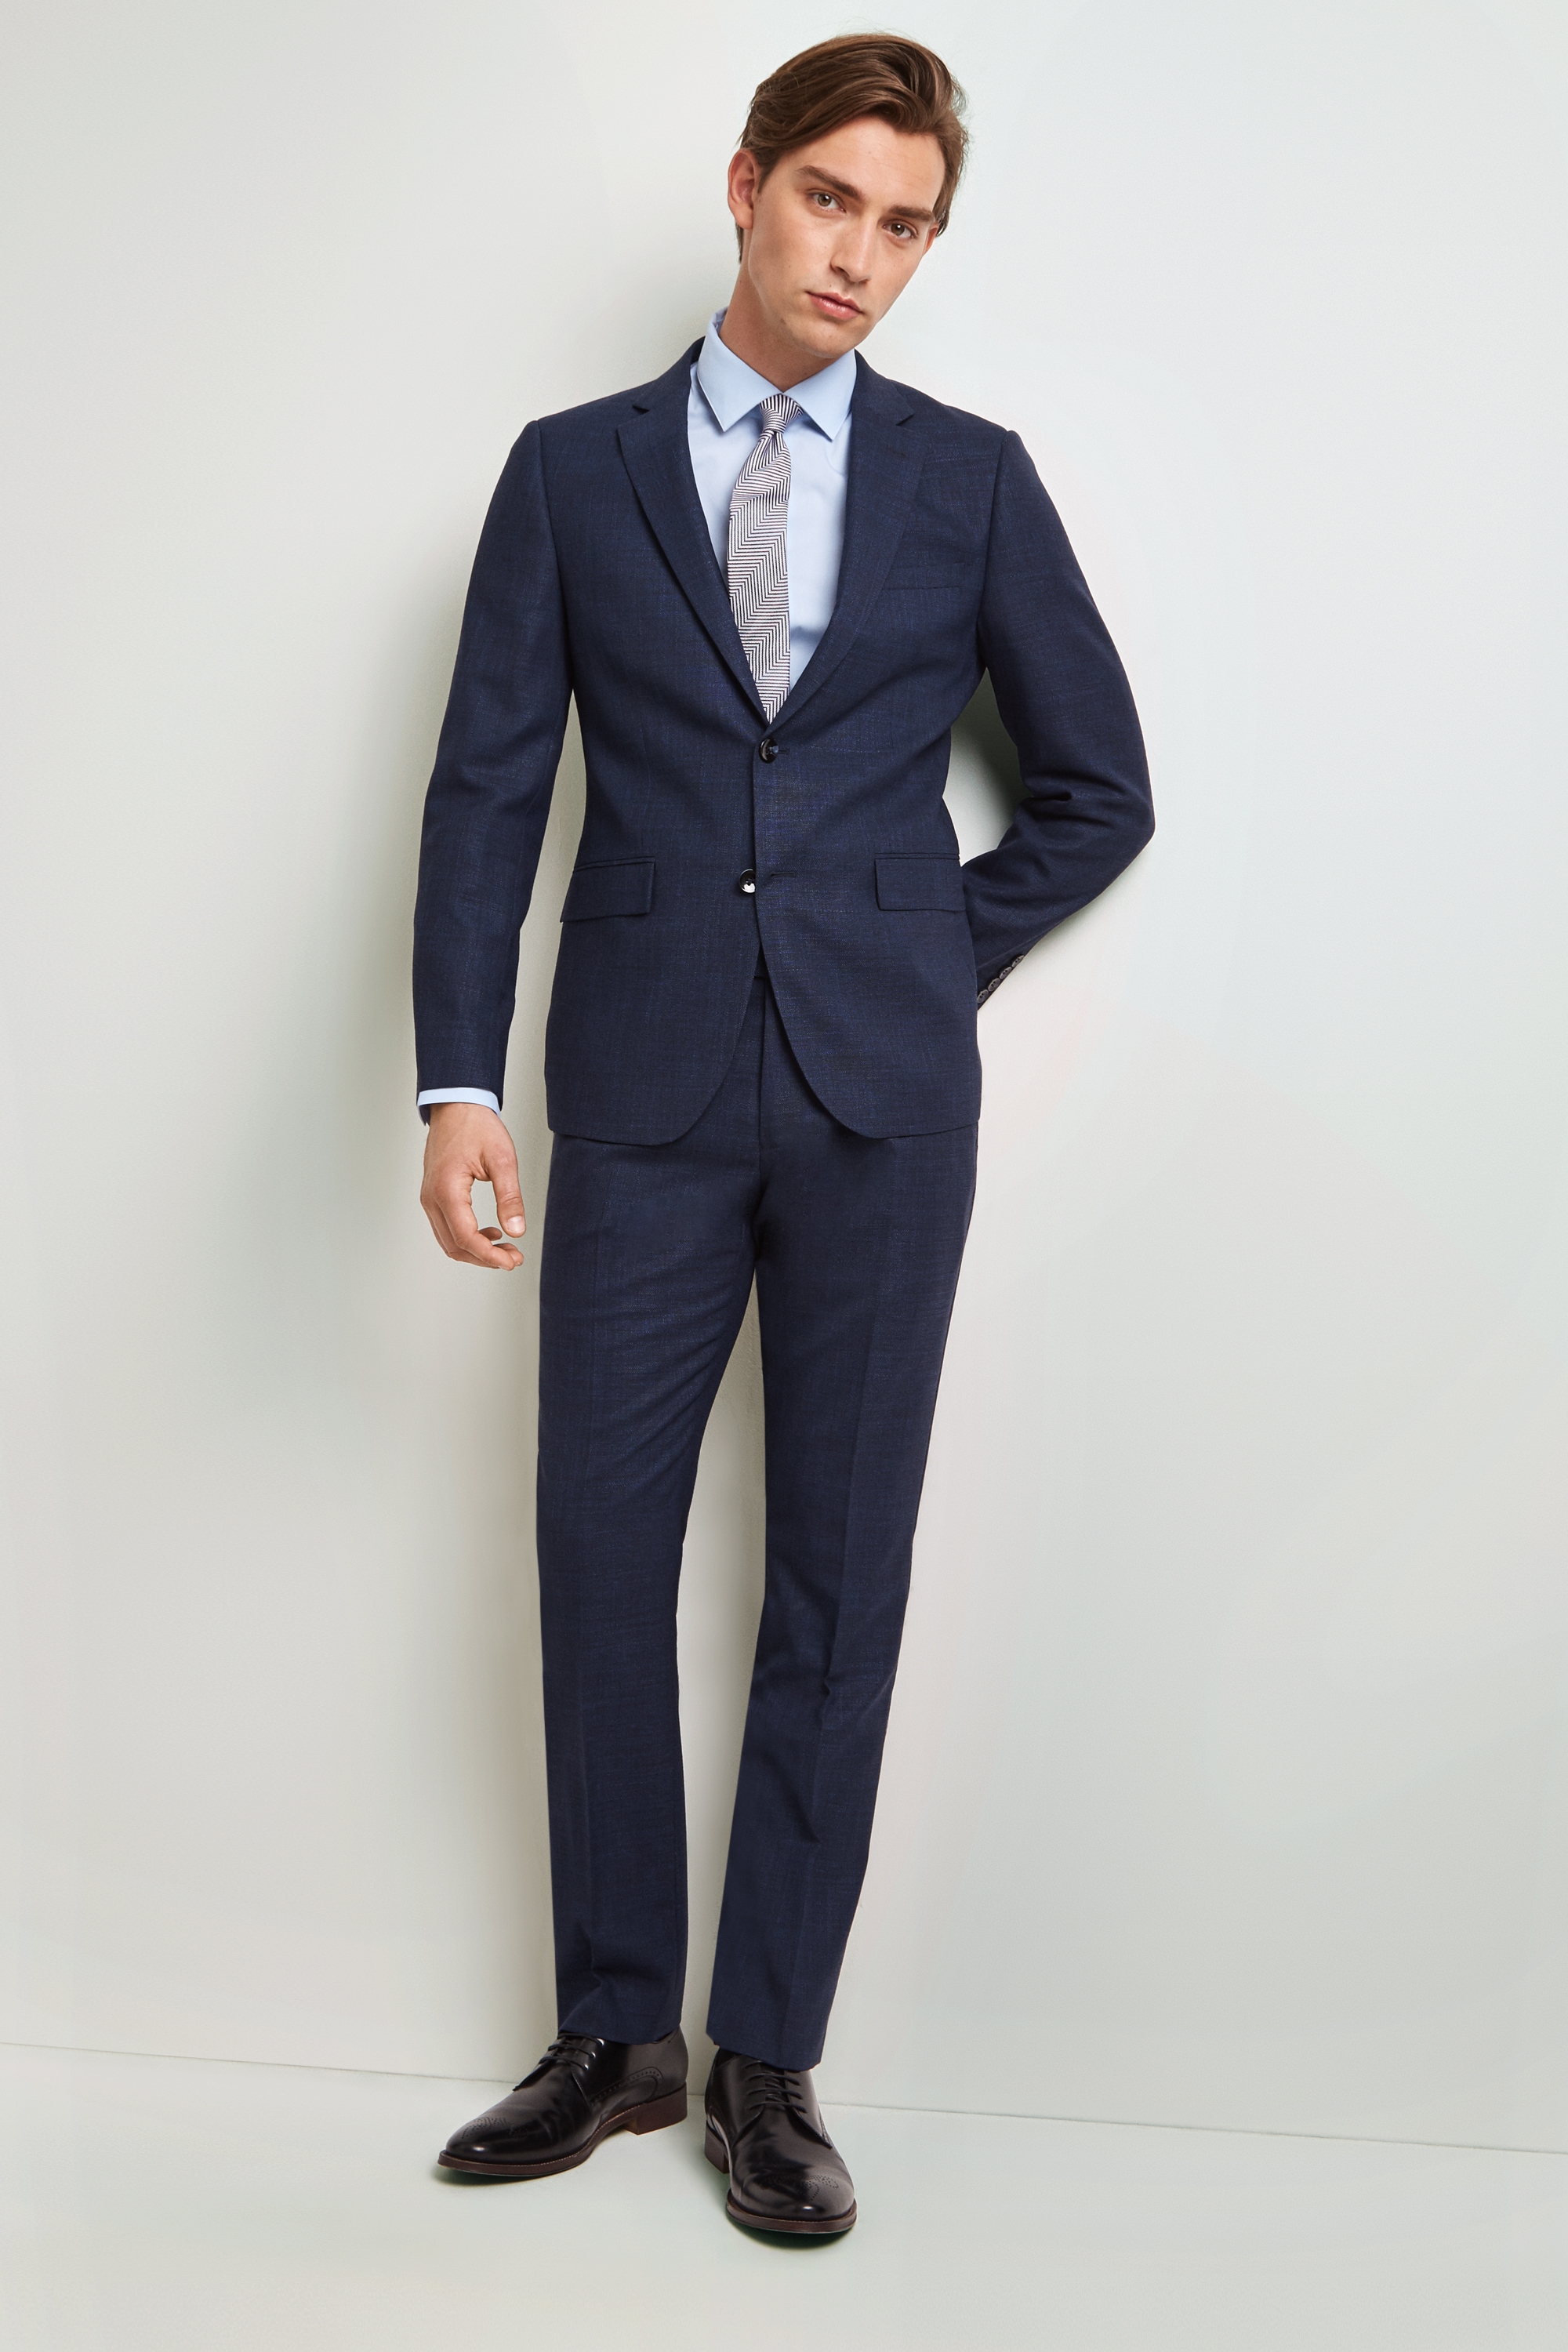 DKNY Slim Fit Teal Texture Suit